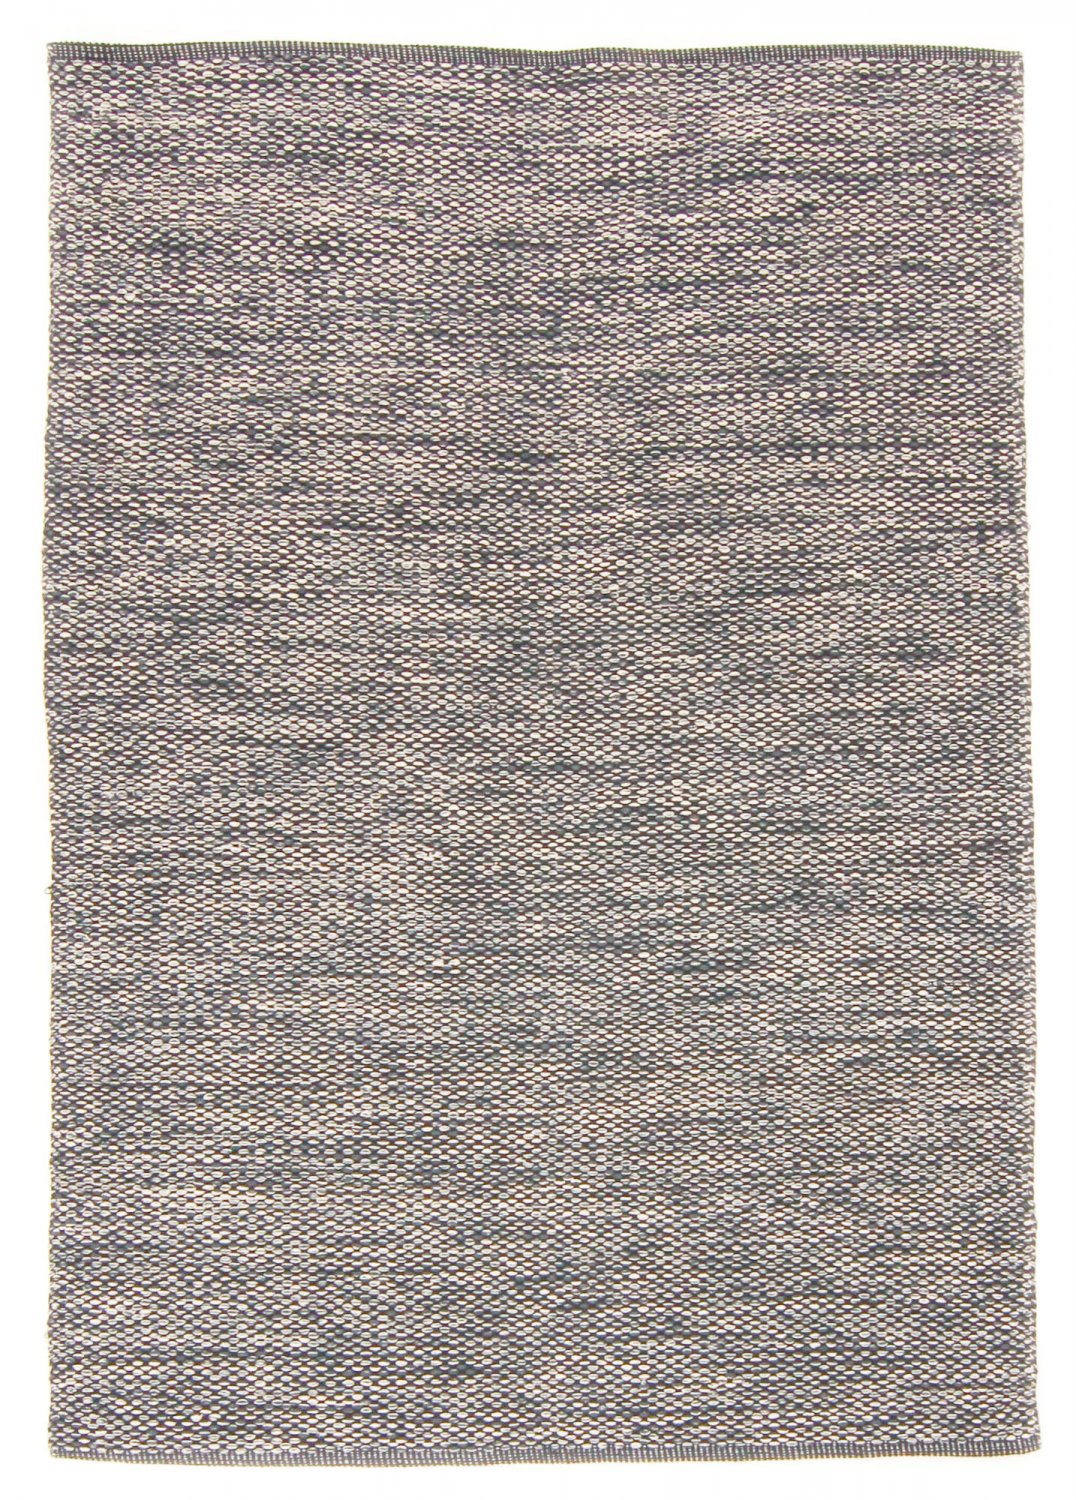 Kludetæppe - Tuva (grå)